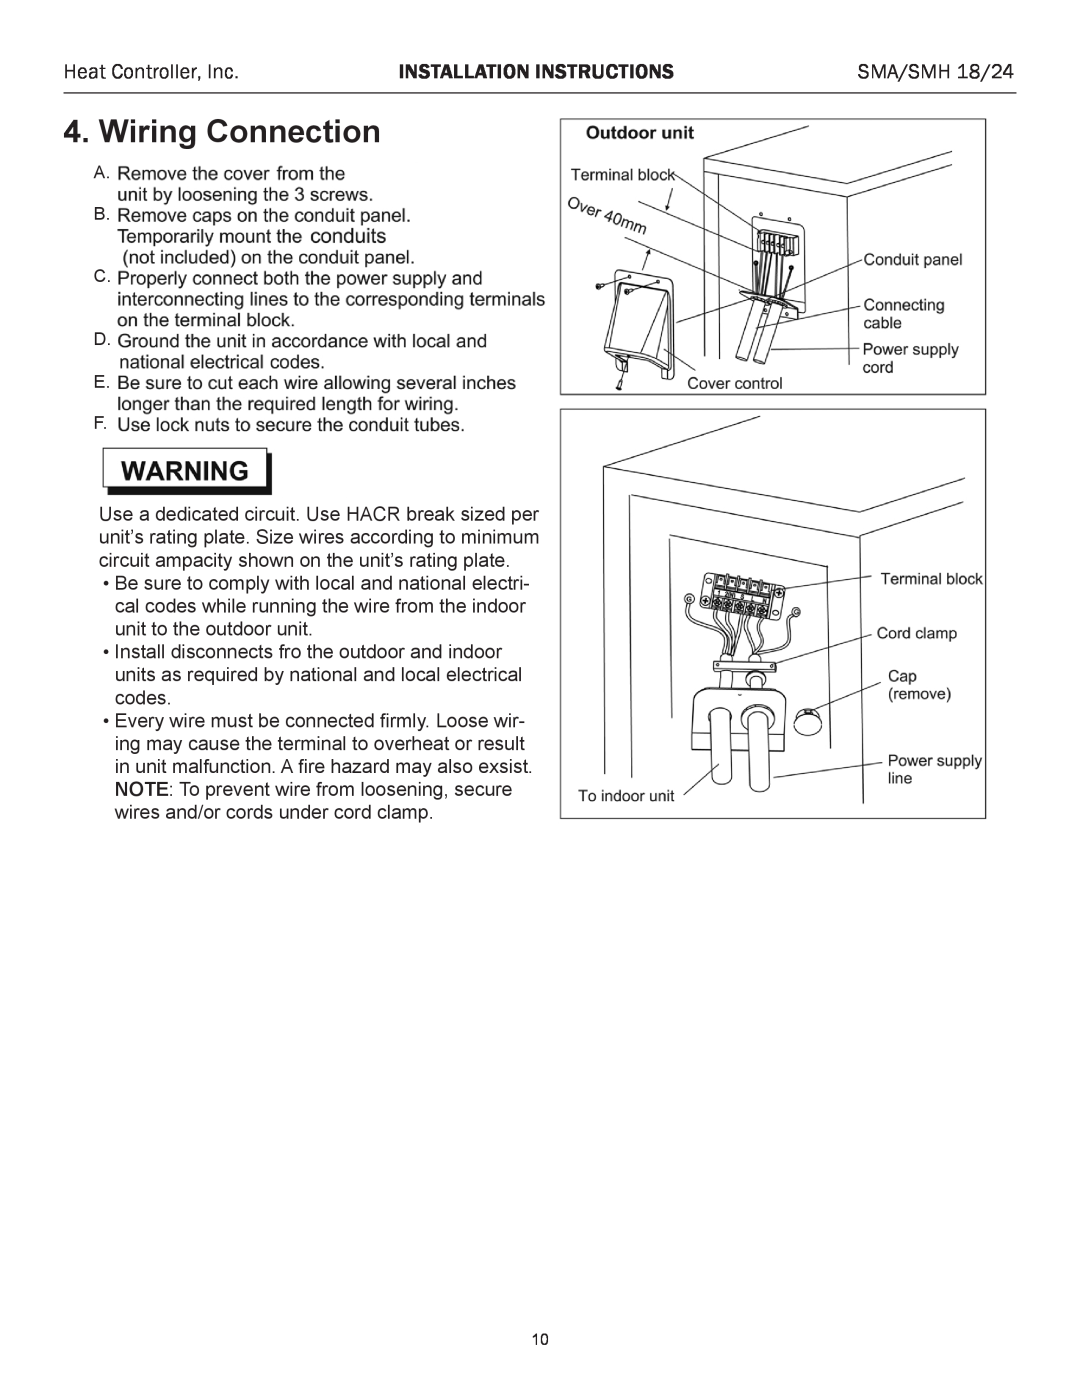 Heat Controller SMA 18 Wiring Connection, Heat Controller, Inc, Installation Instructions, SMA/SMH 18/24, A B C D E F 